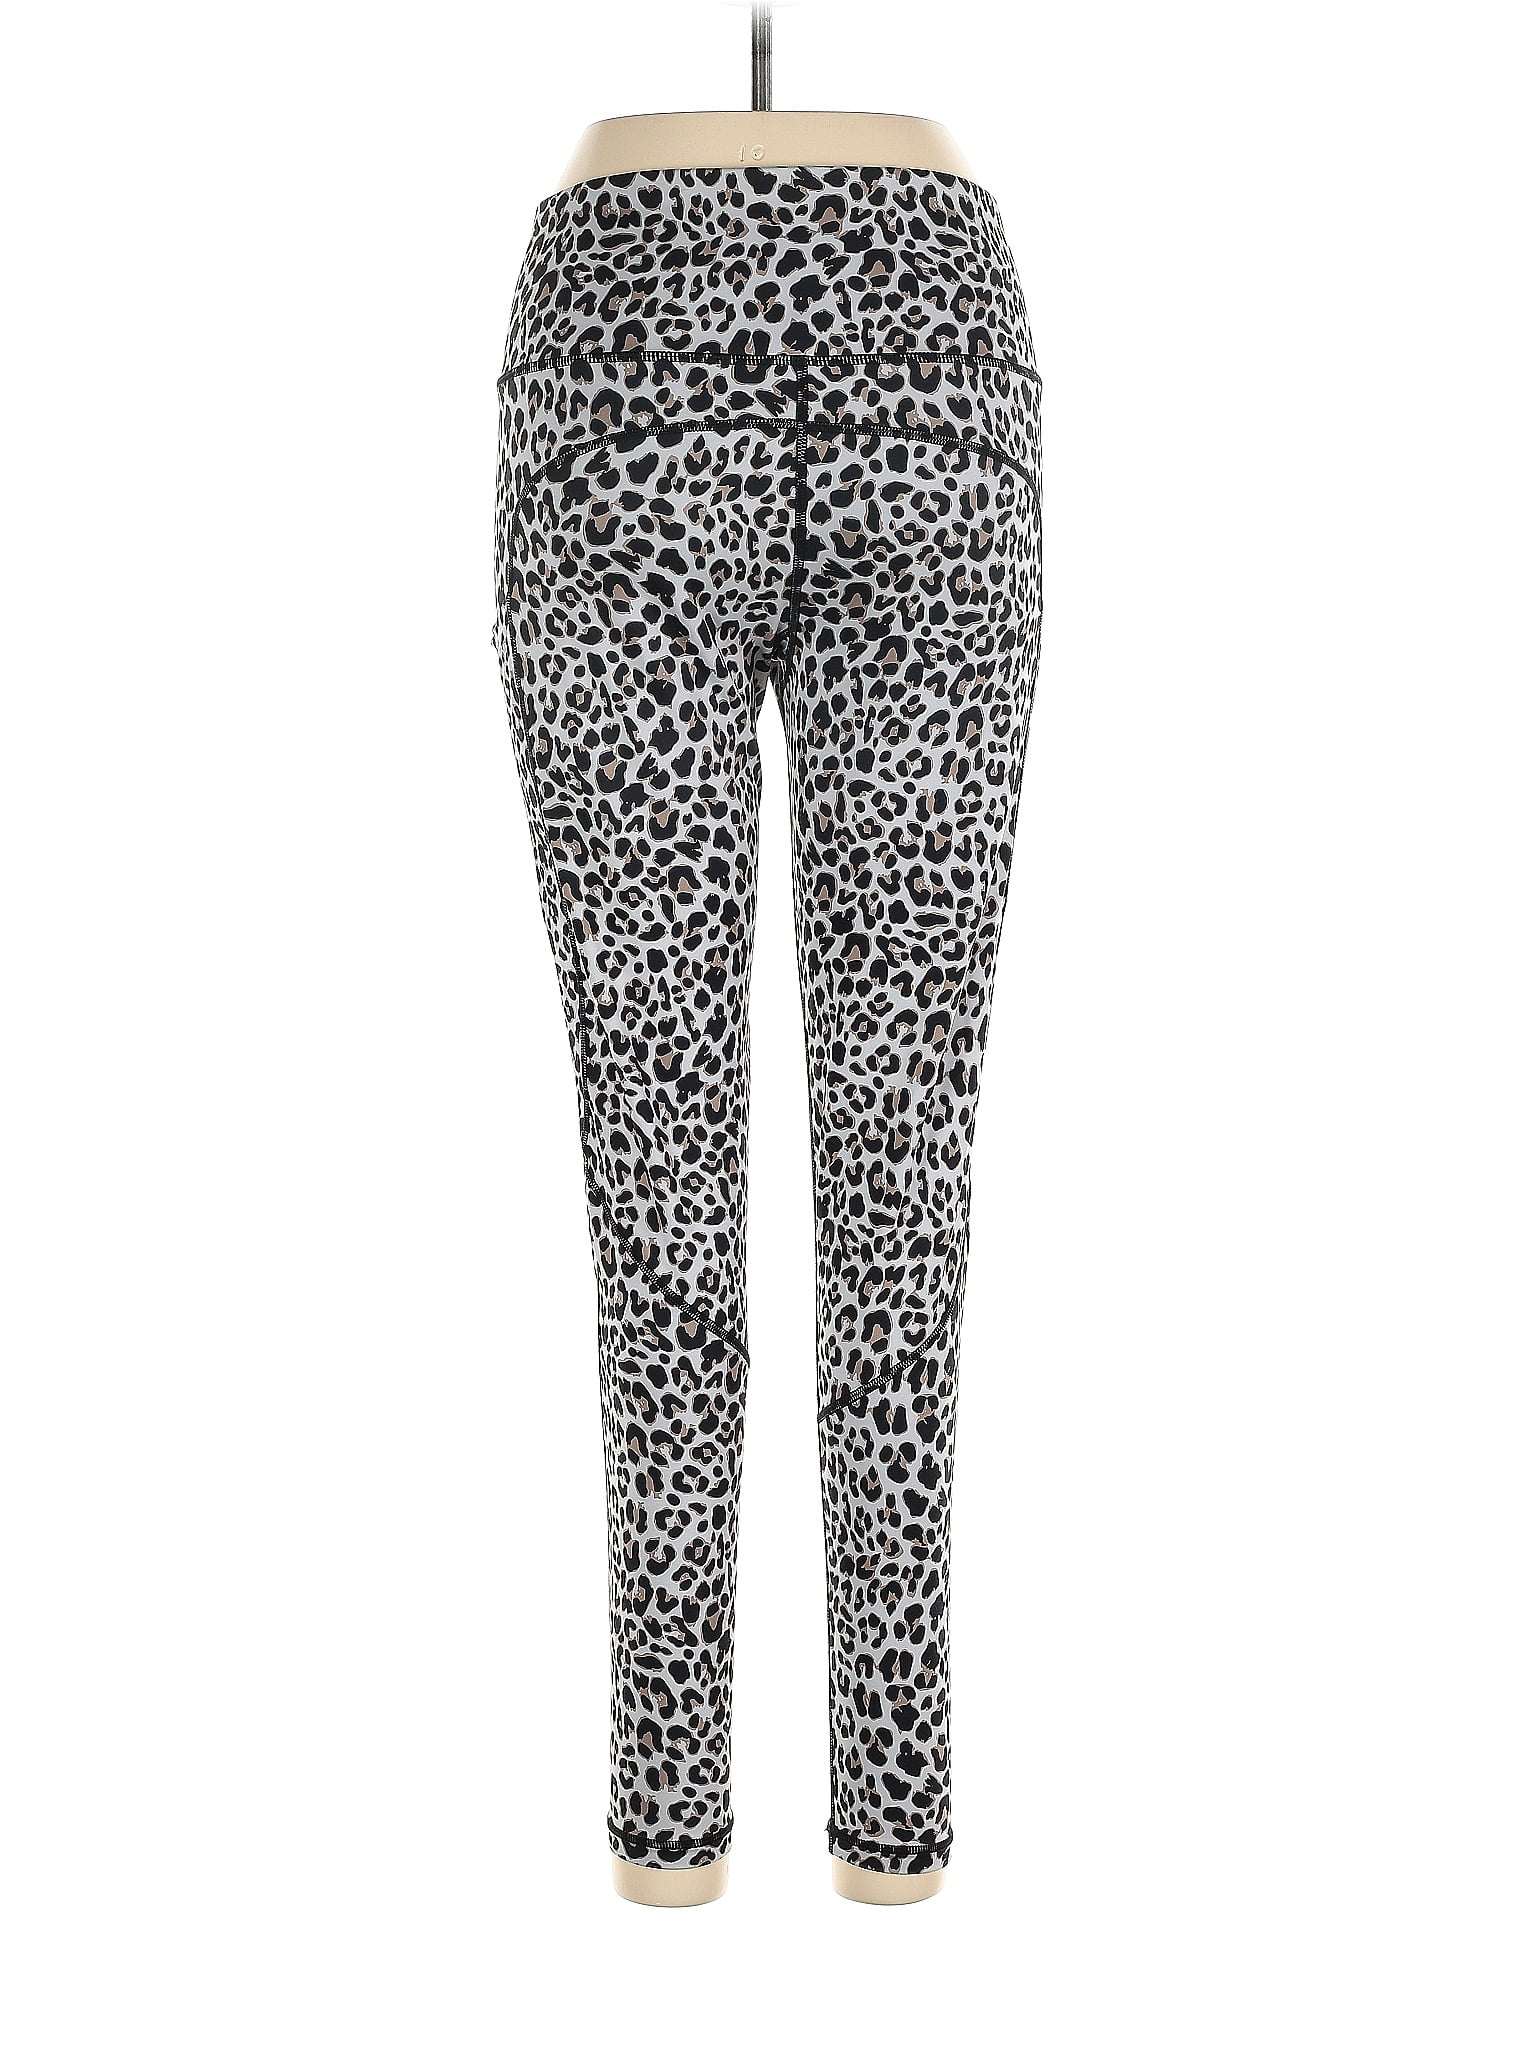 Assorted Brands Leopard Print Multi Color Silver Leggings Size L - 48% off